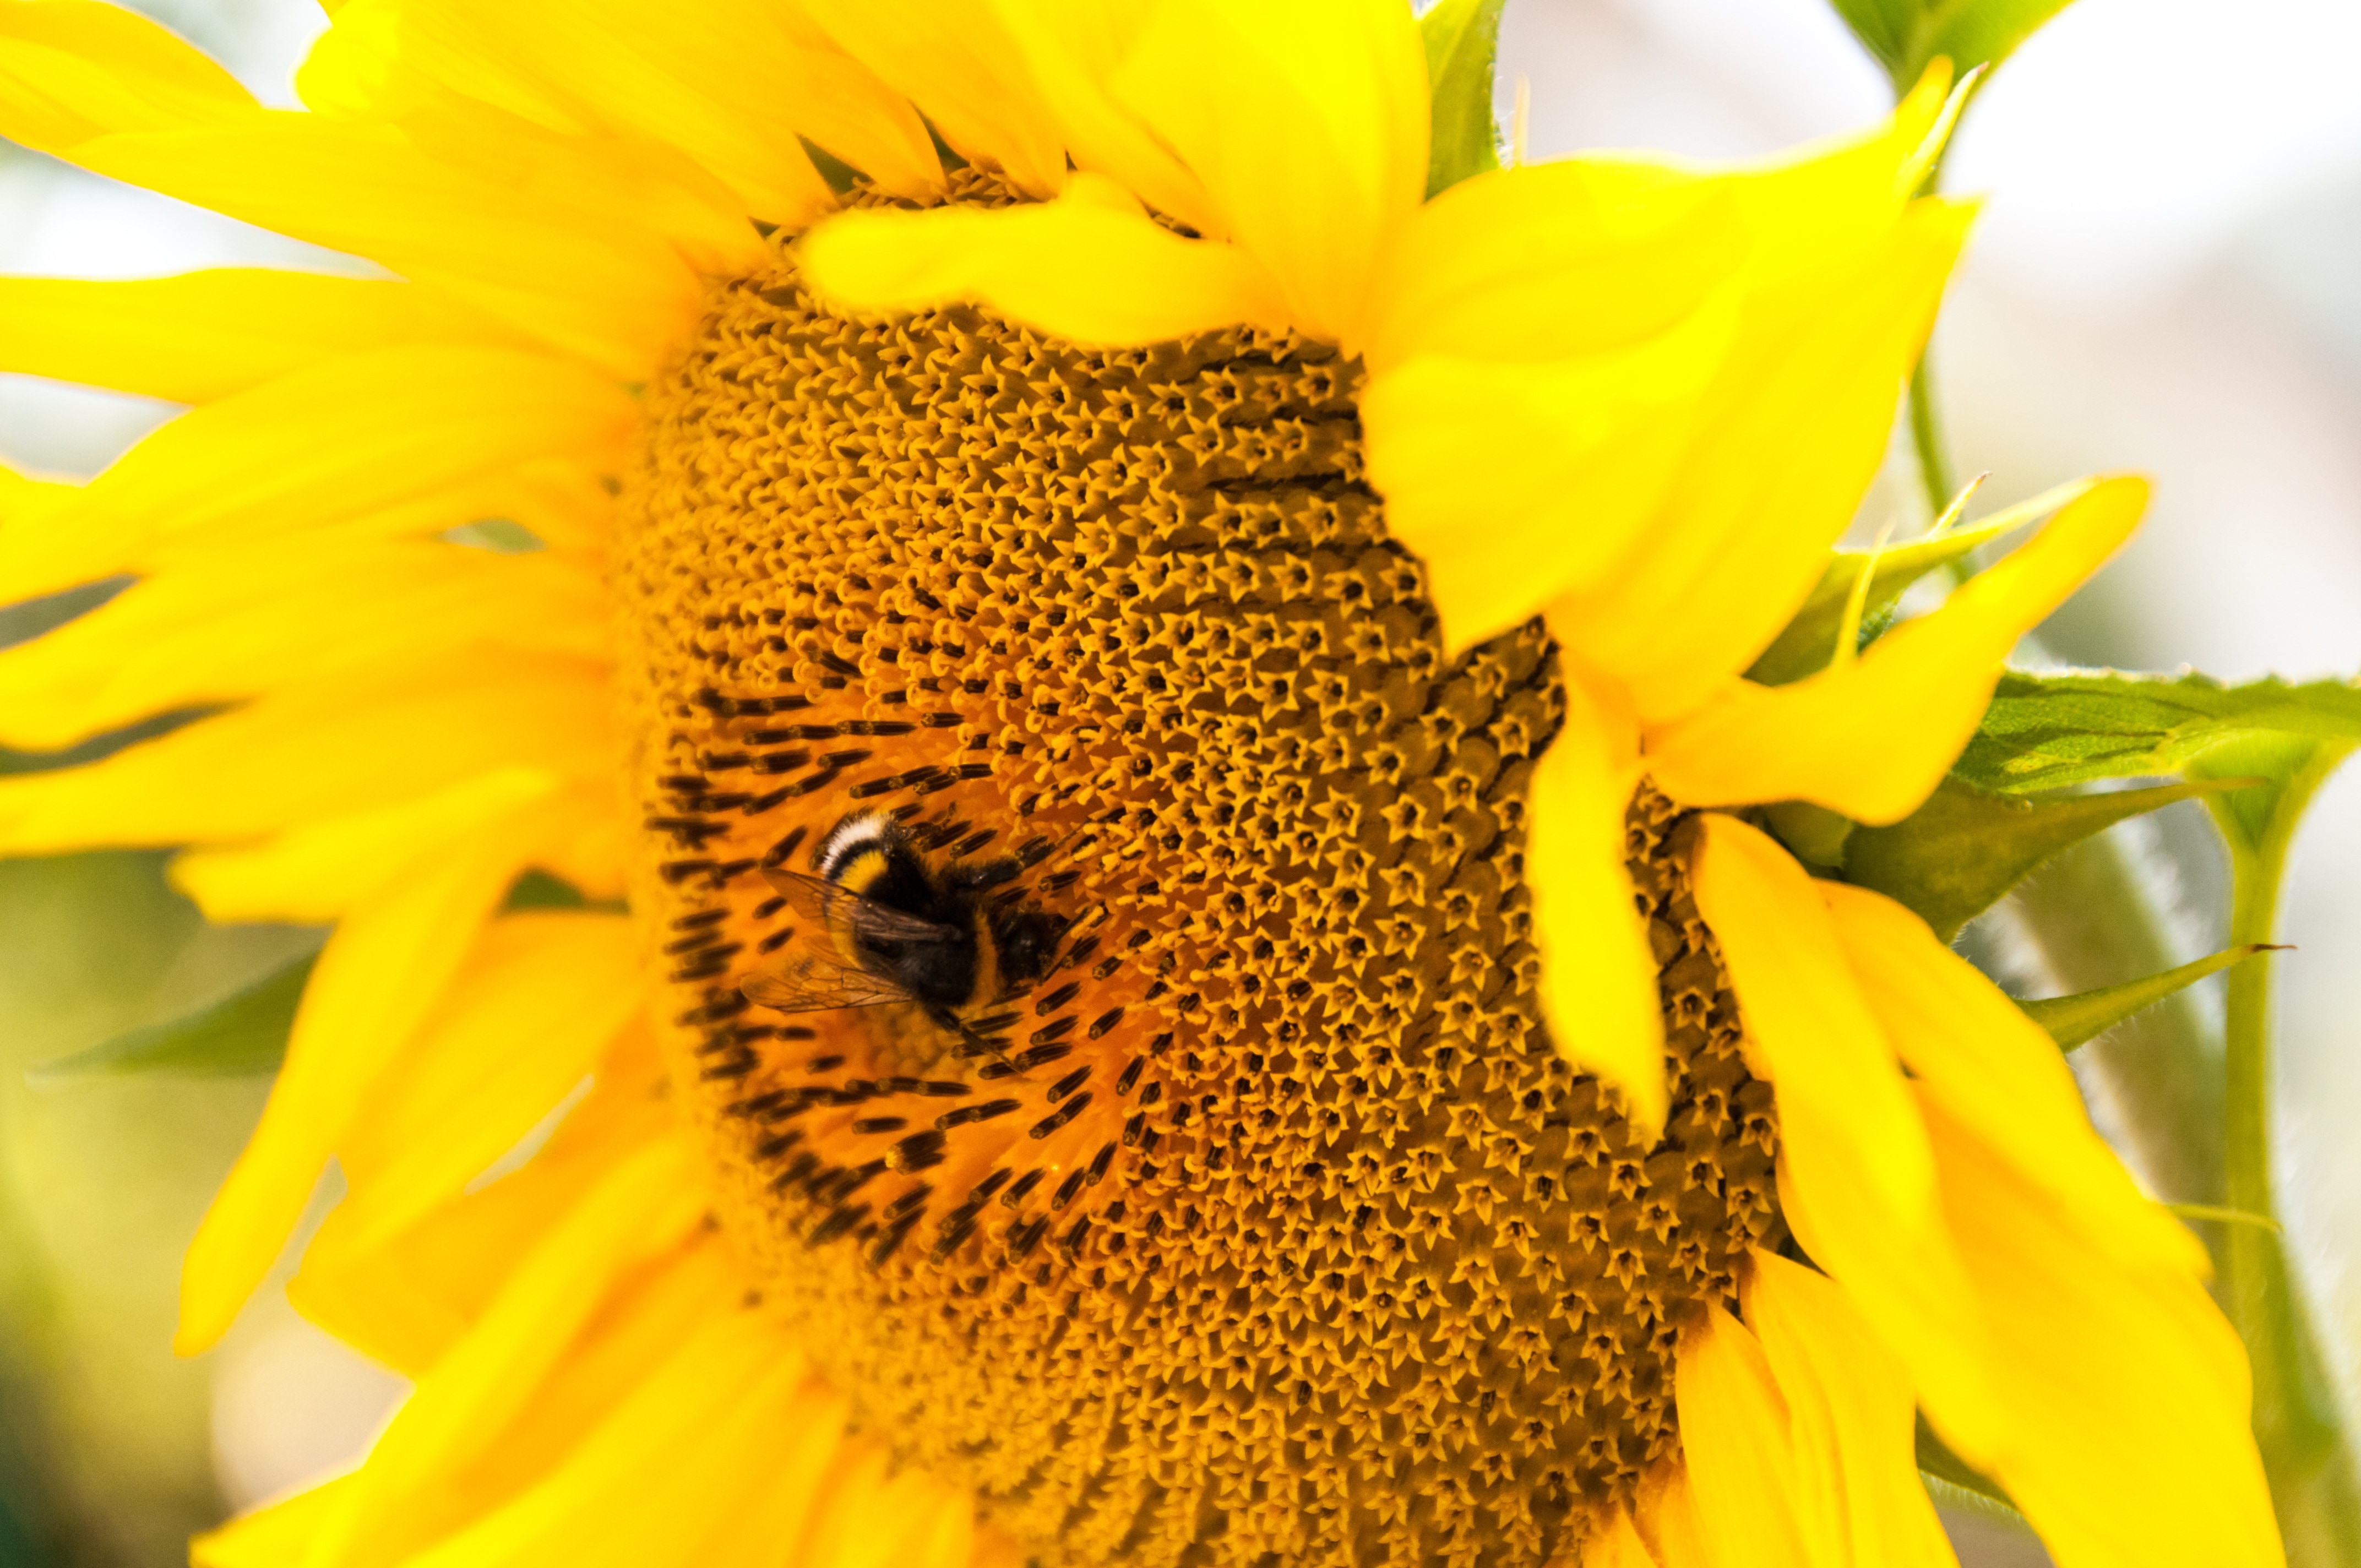 deep yellow sunflower macro lens photography